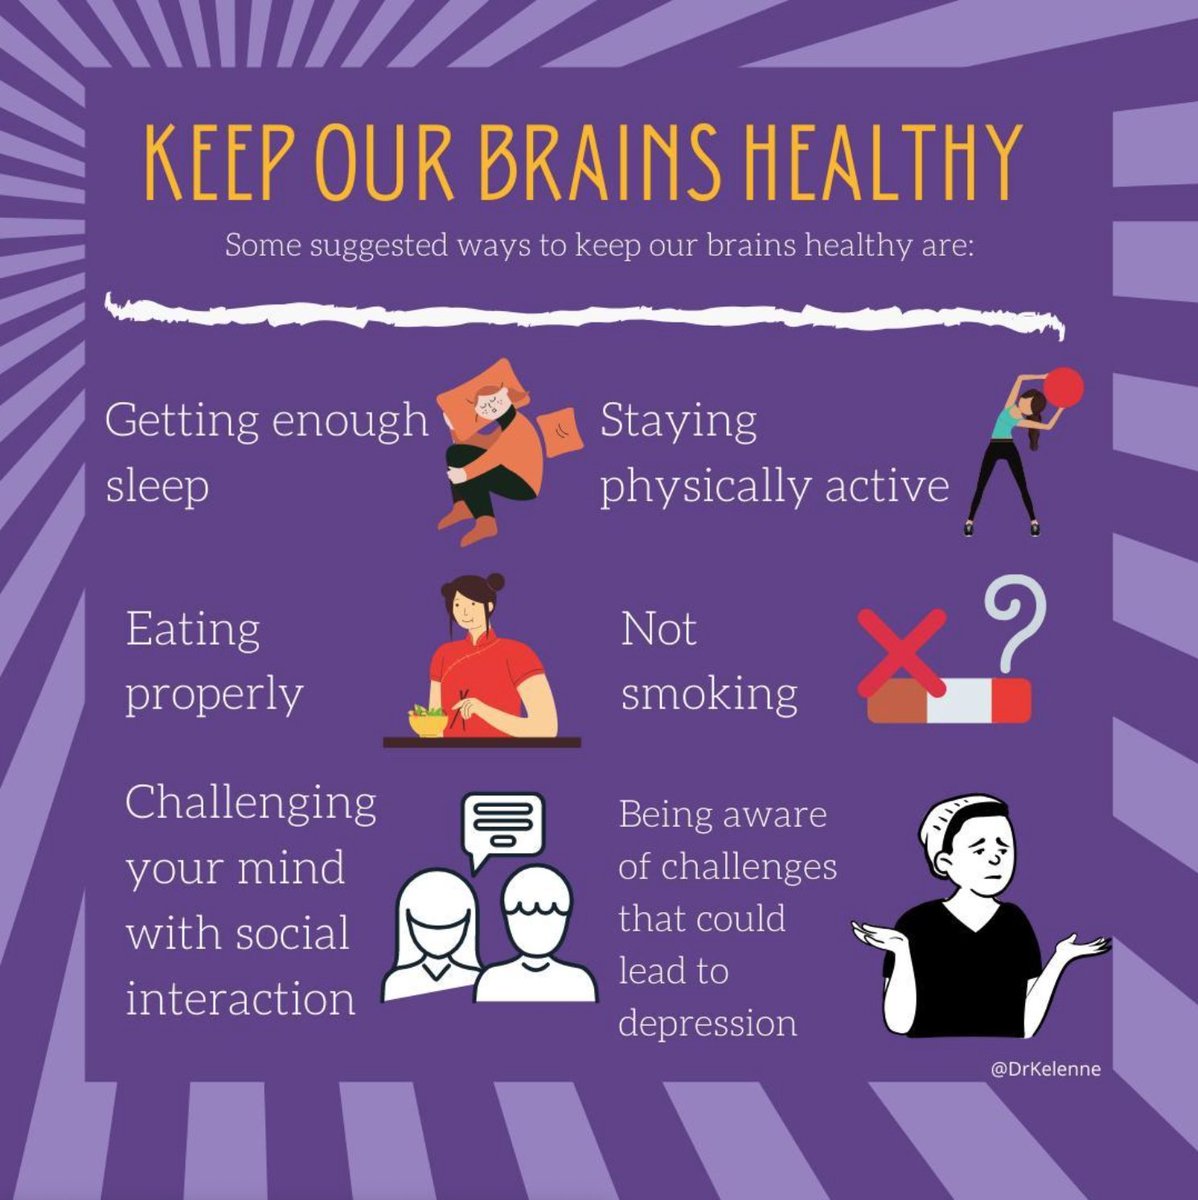 Keep your brains healthy. Always practice the following tips. 

#healthcaretips #familymedicine #caribbean #blackdoctor #telemedicine #telehealth #yourcaribbeandoctor #alzheimersawareness 🇹🇹🇻🇨🇵🇷🇦🇬🇧🇸🇧🇧🇧🇷🇨🇦🇫🇰🇬🇩🇬🇾🇯🇲🇭🇹🇱🇨🇰🇳